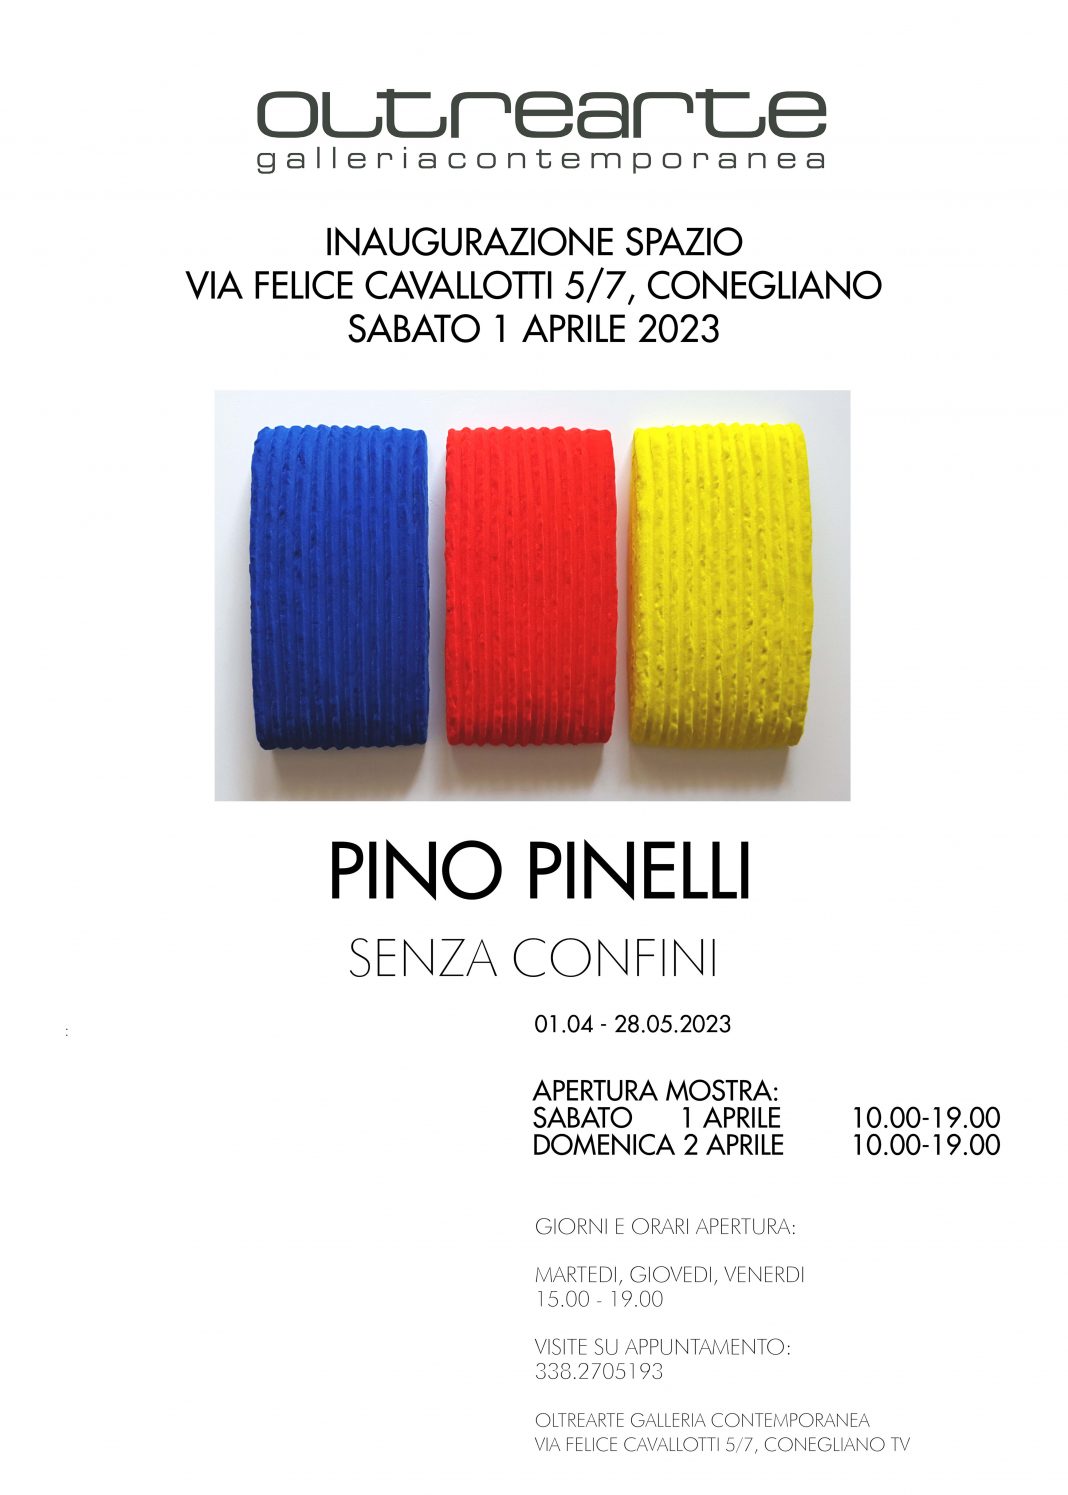 Pino Pinelli – Senza confinihttps://www.exibart.com/repository/media/formidable/11/img/a3d/PINELLI-2023-Manifesto-mostra-small-2-1068x1495.jpg